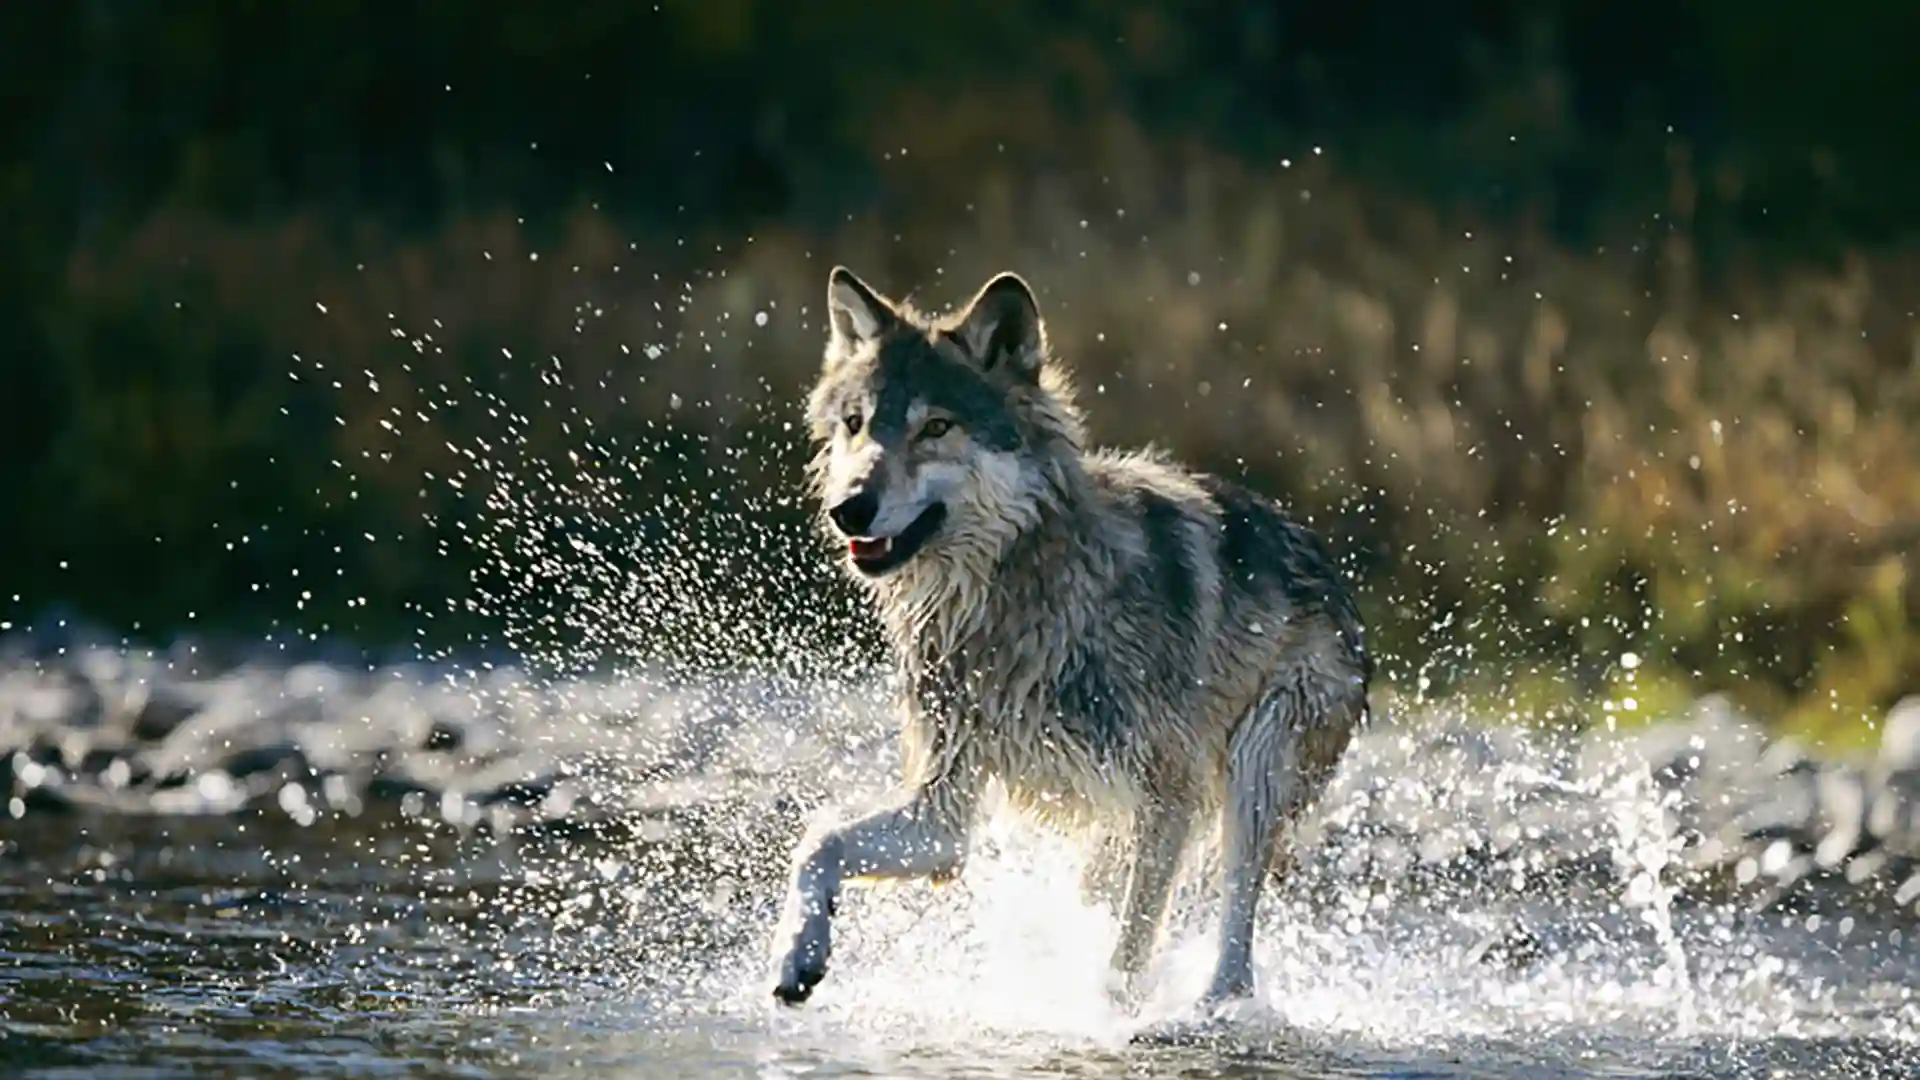 View of wolf splashing in water.